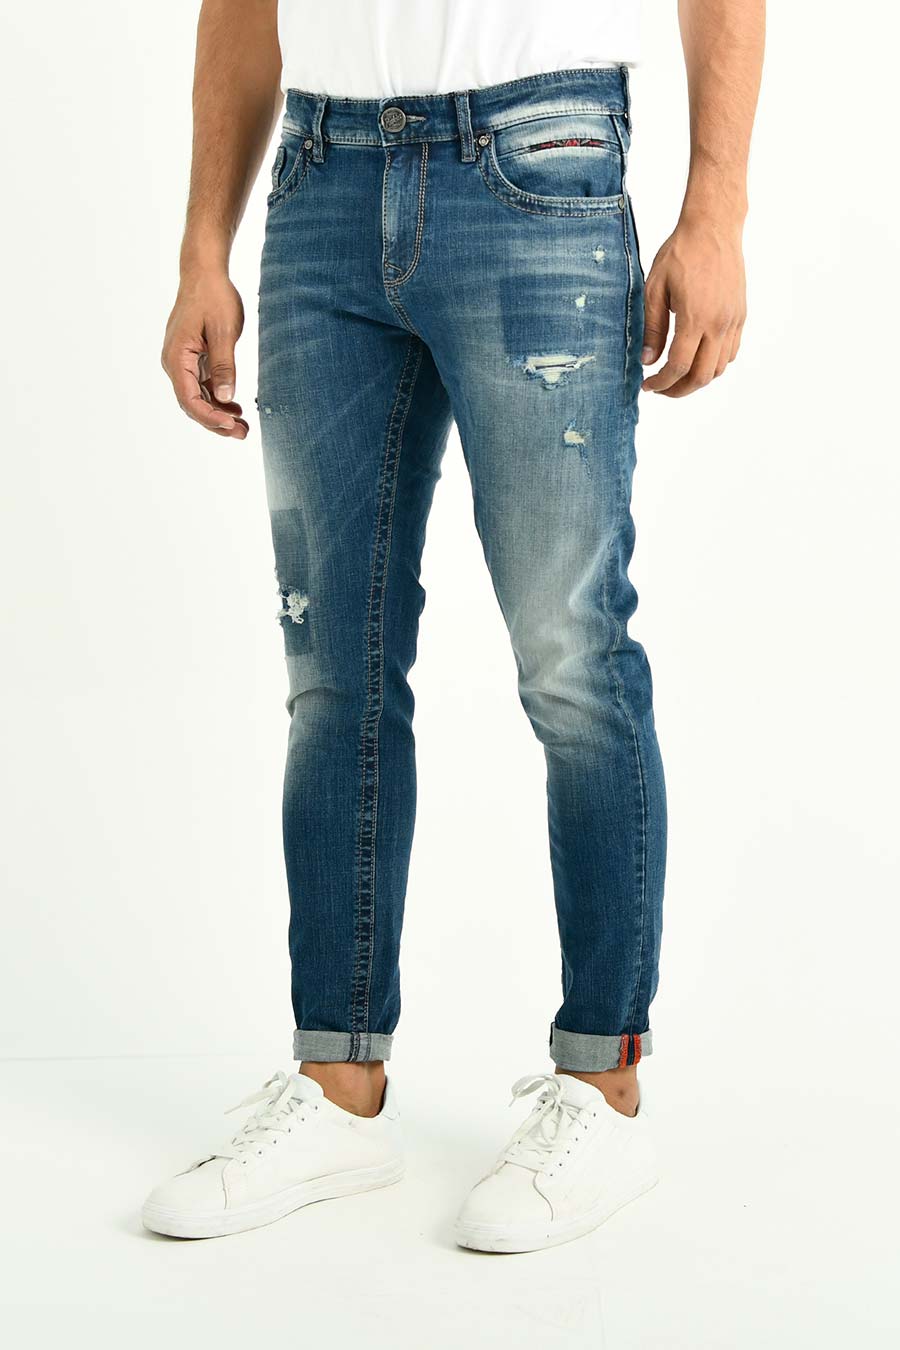 Men’s Denim Jeans-RJ3998